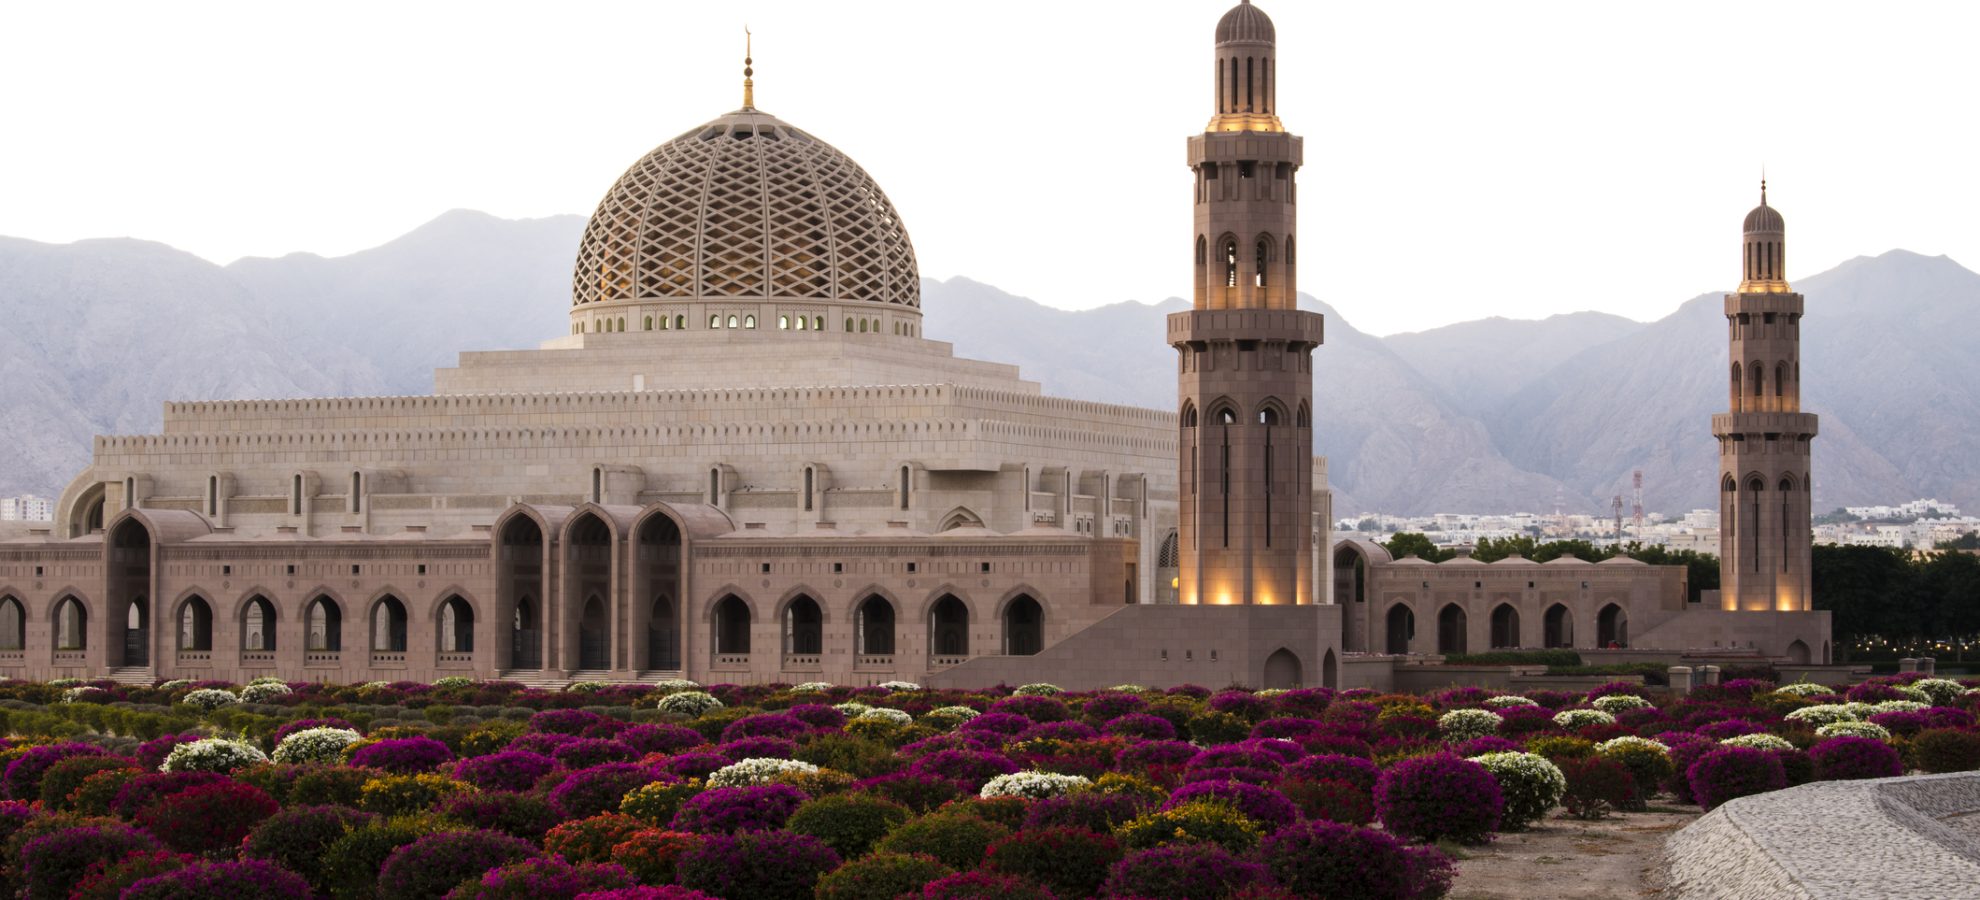 Grand mosque, Muscat, Oman